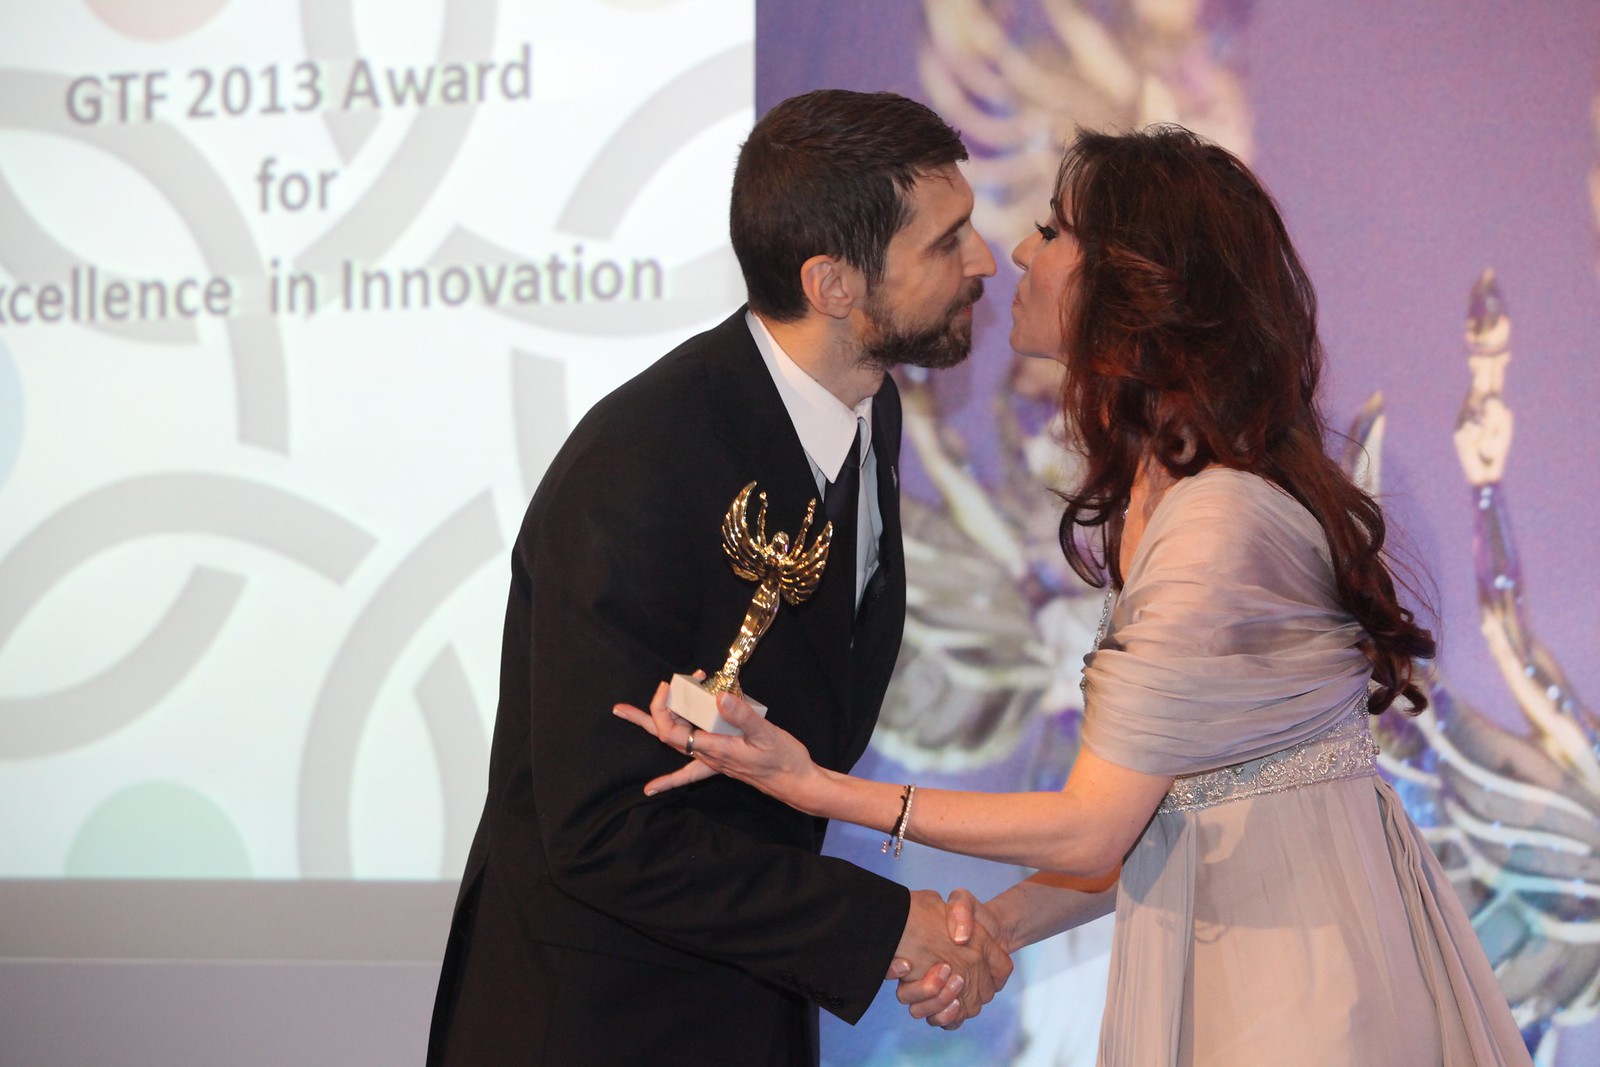 Nikos Floros, GTF 2013 Award for Excellence in Innovation from Elizabeth Filippouli